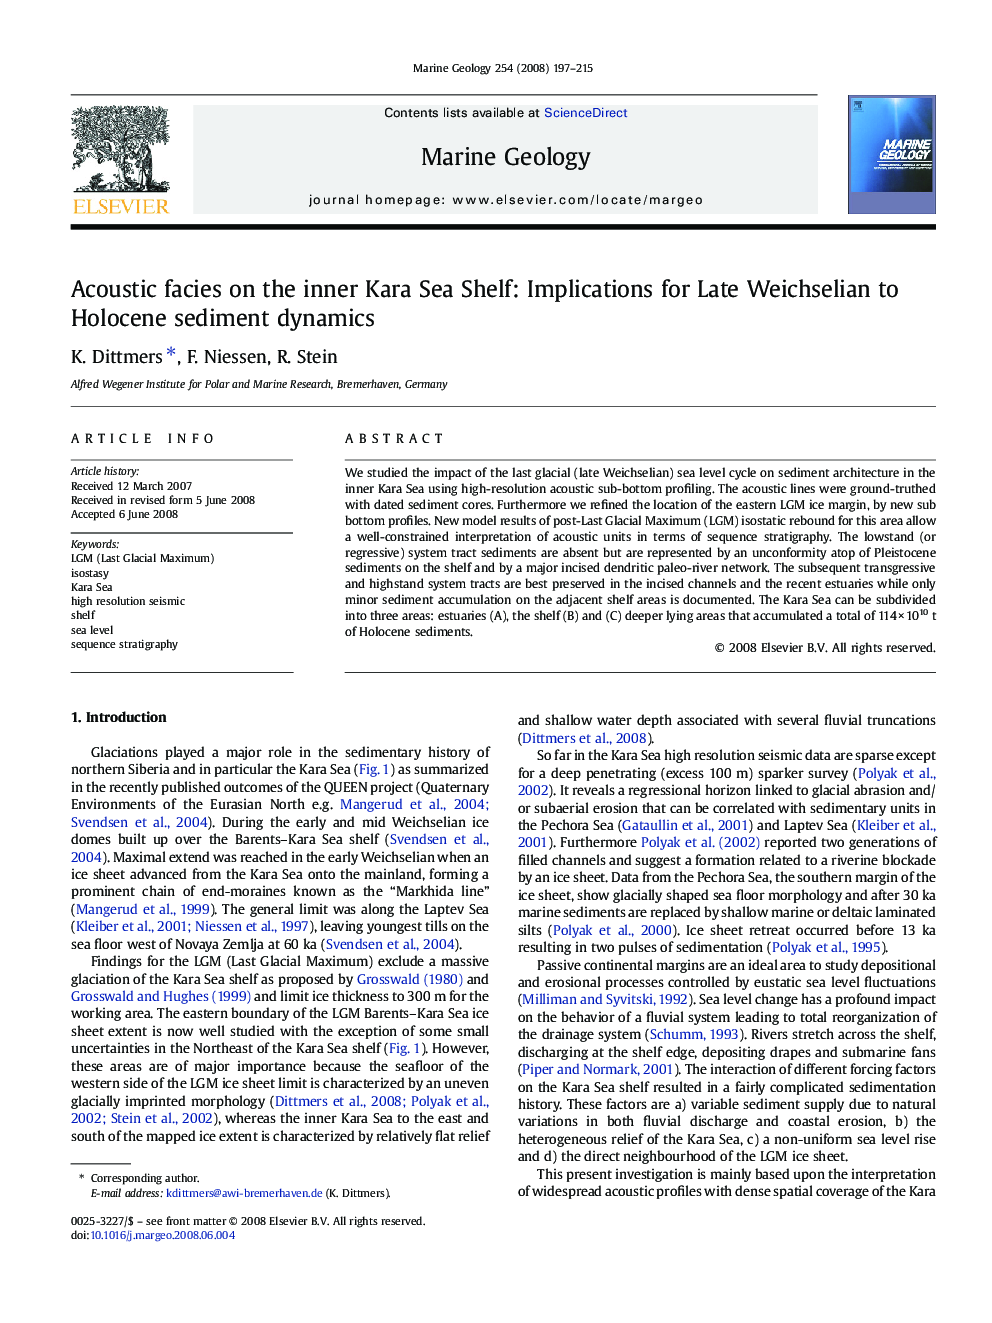 Acoustic facies on the inner Kara Sea Shelf: Implications for Late Weichselian to Holocene sediment dynamics